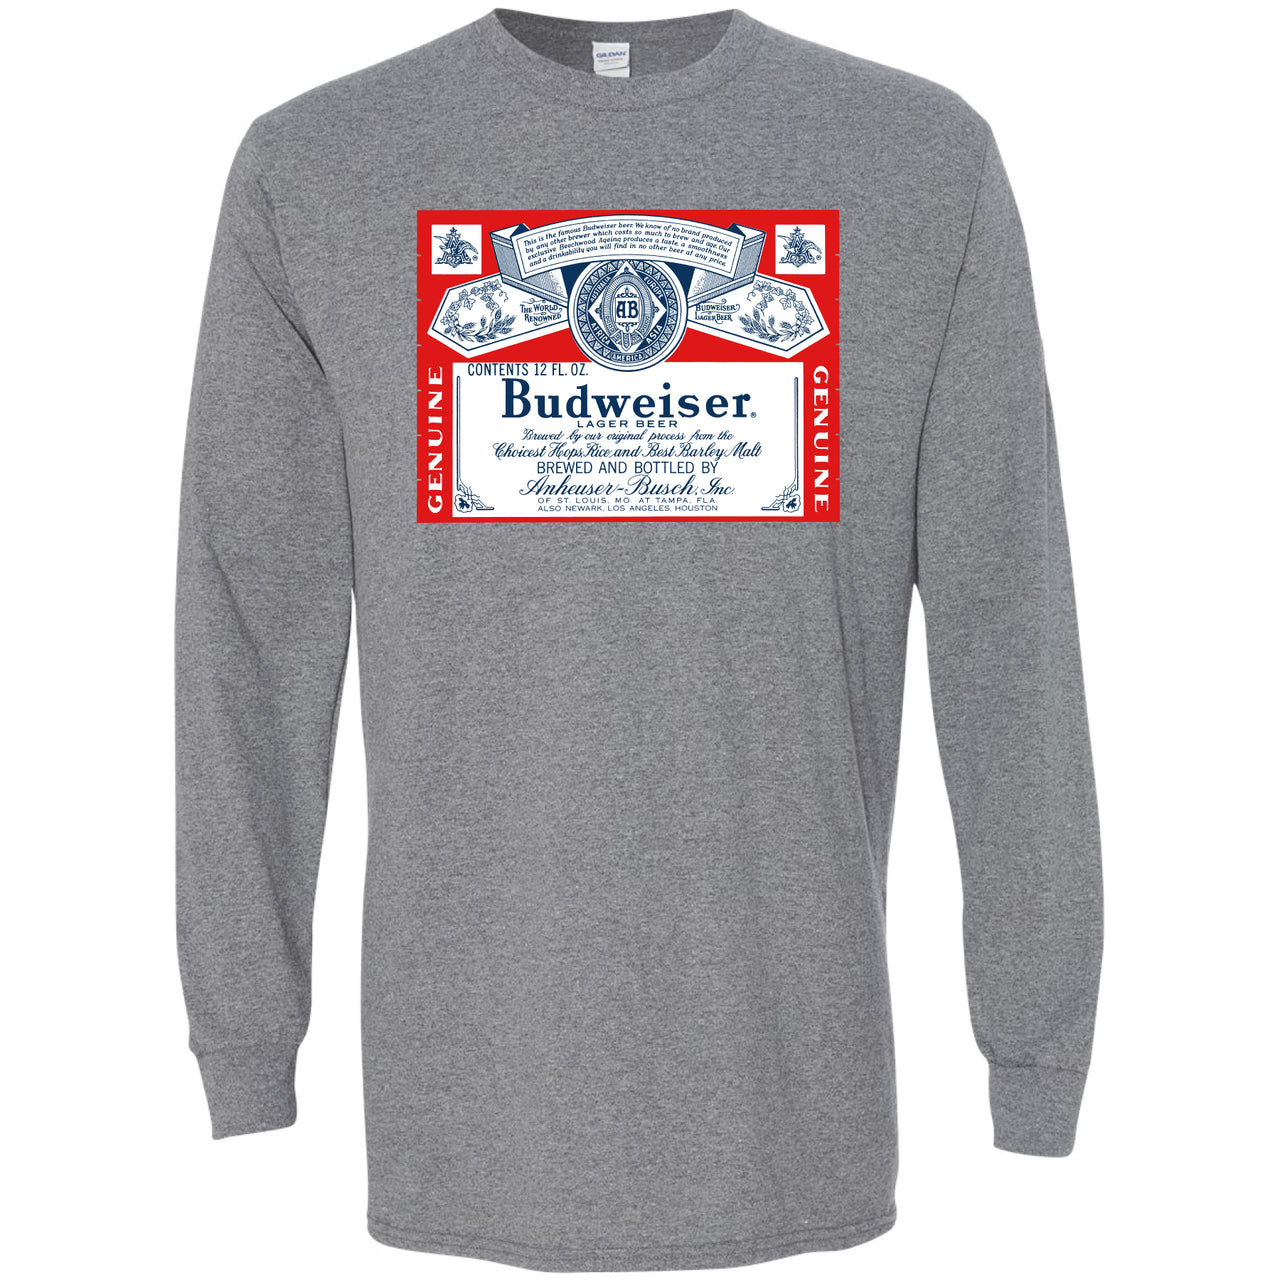 Budweiser Vintage 1966 Label Long Sleeve T-Shirt